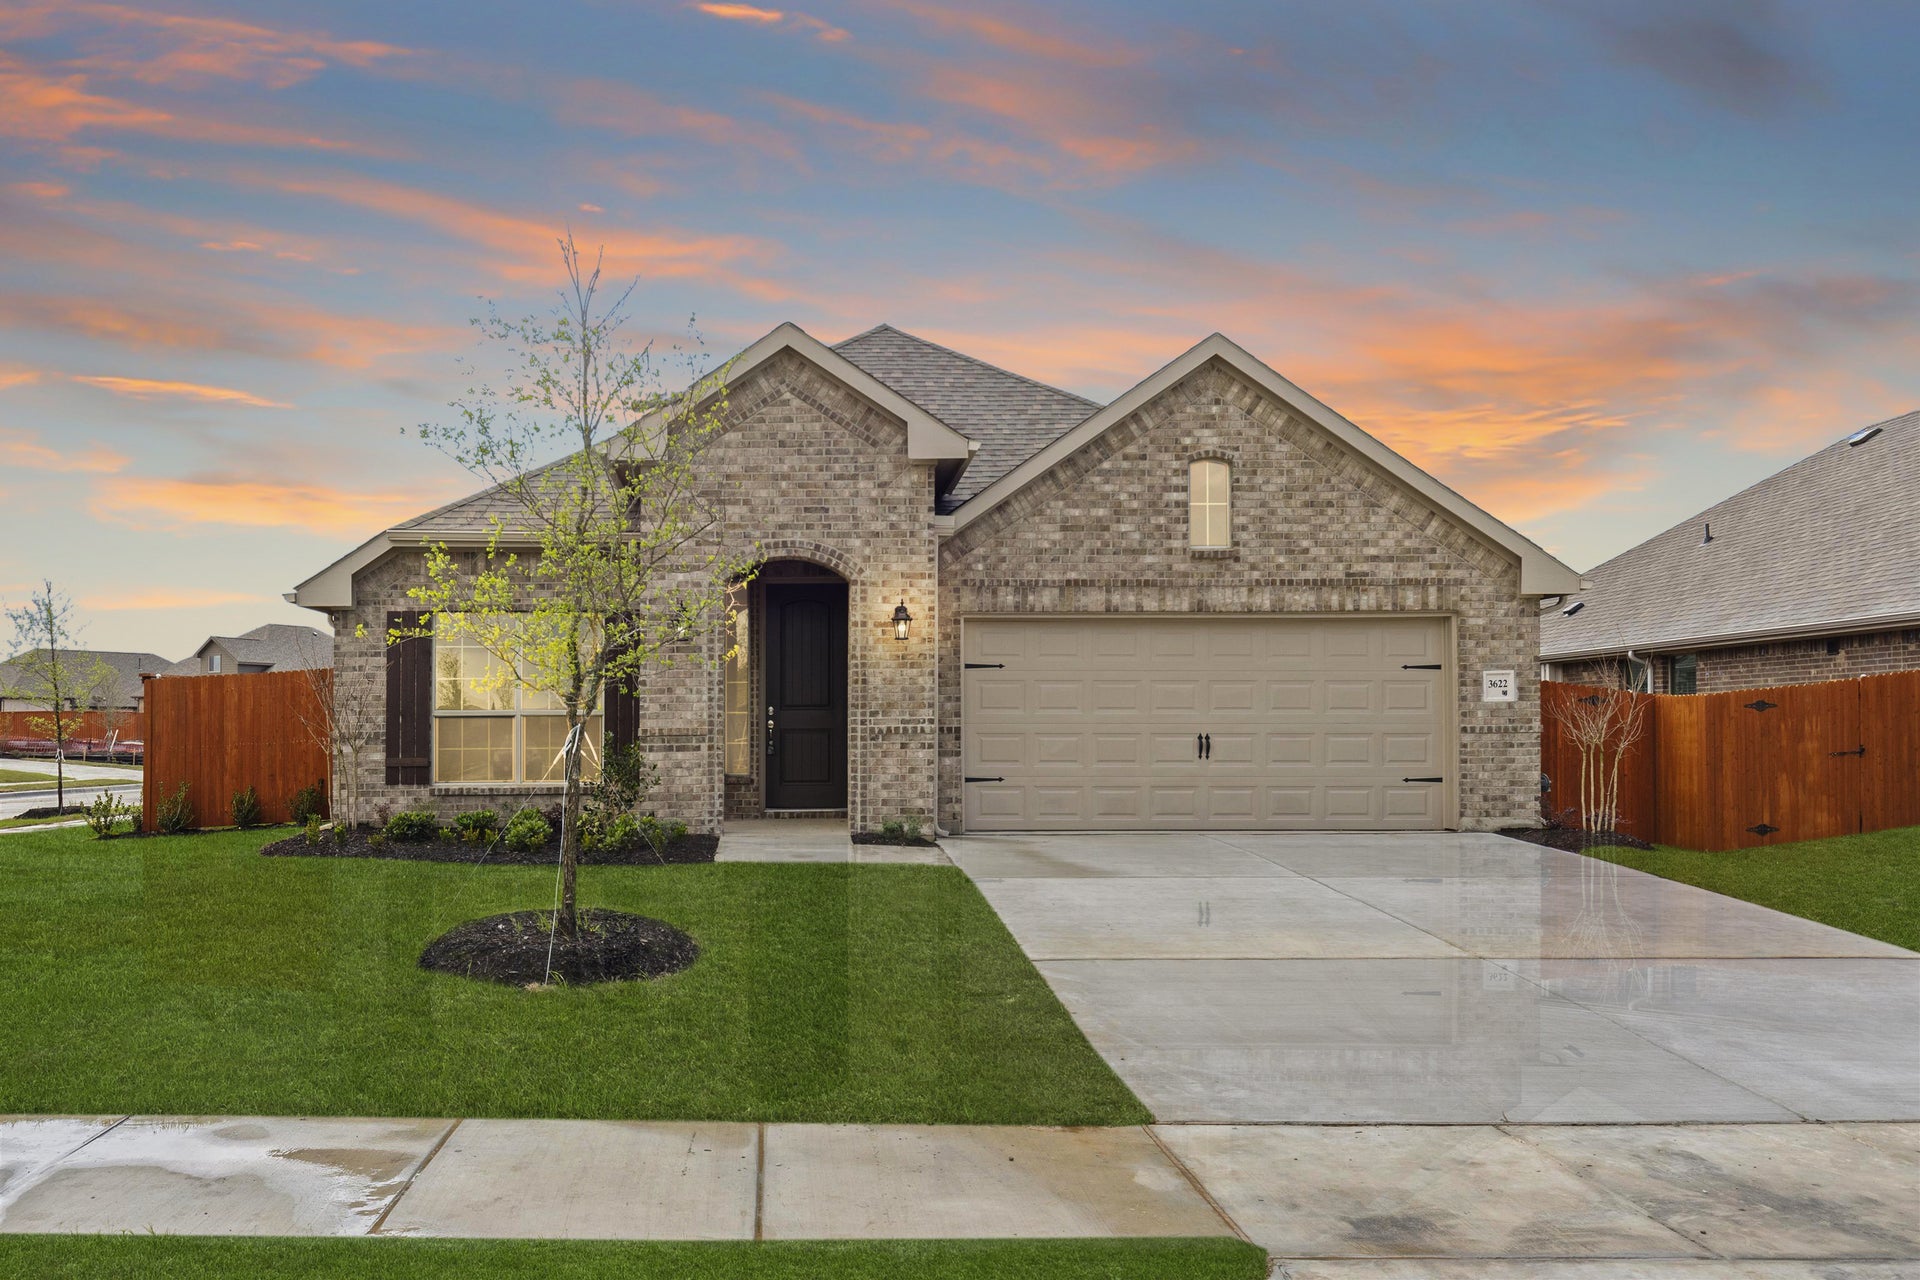 2,065sf New Home in Heartland, TX